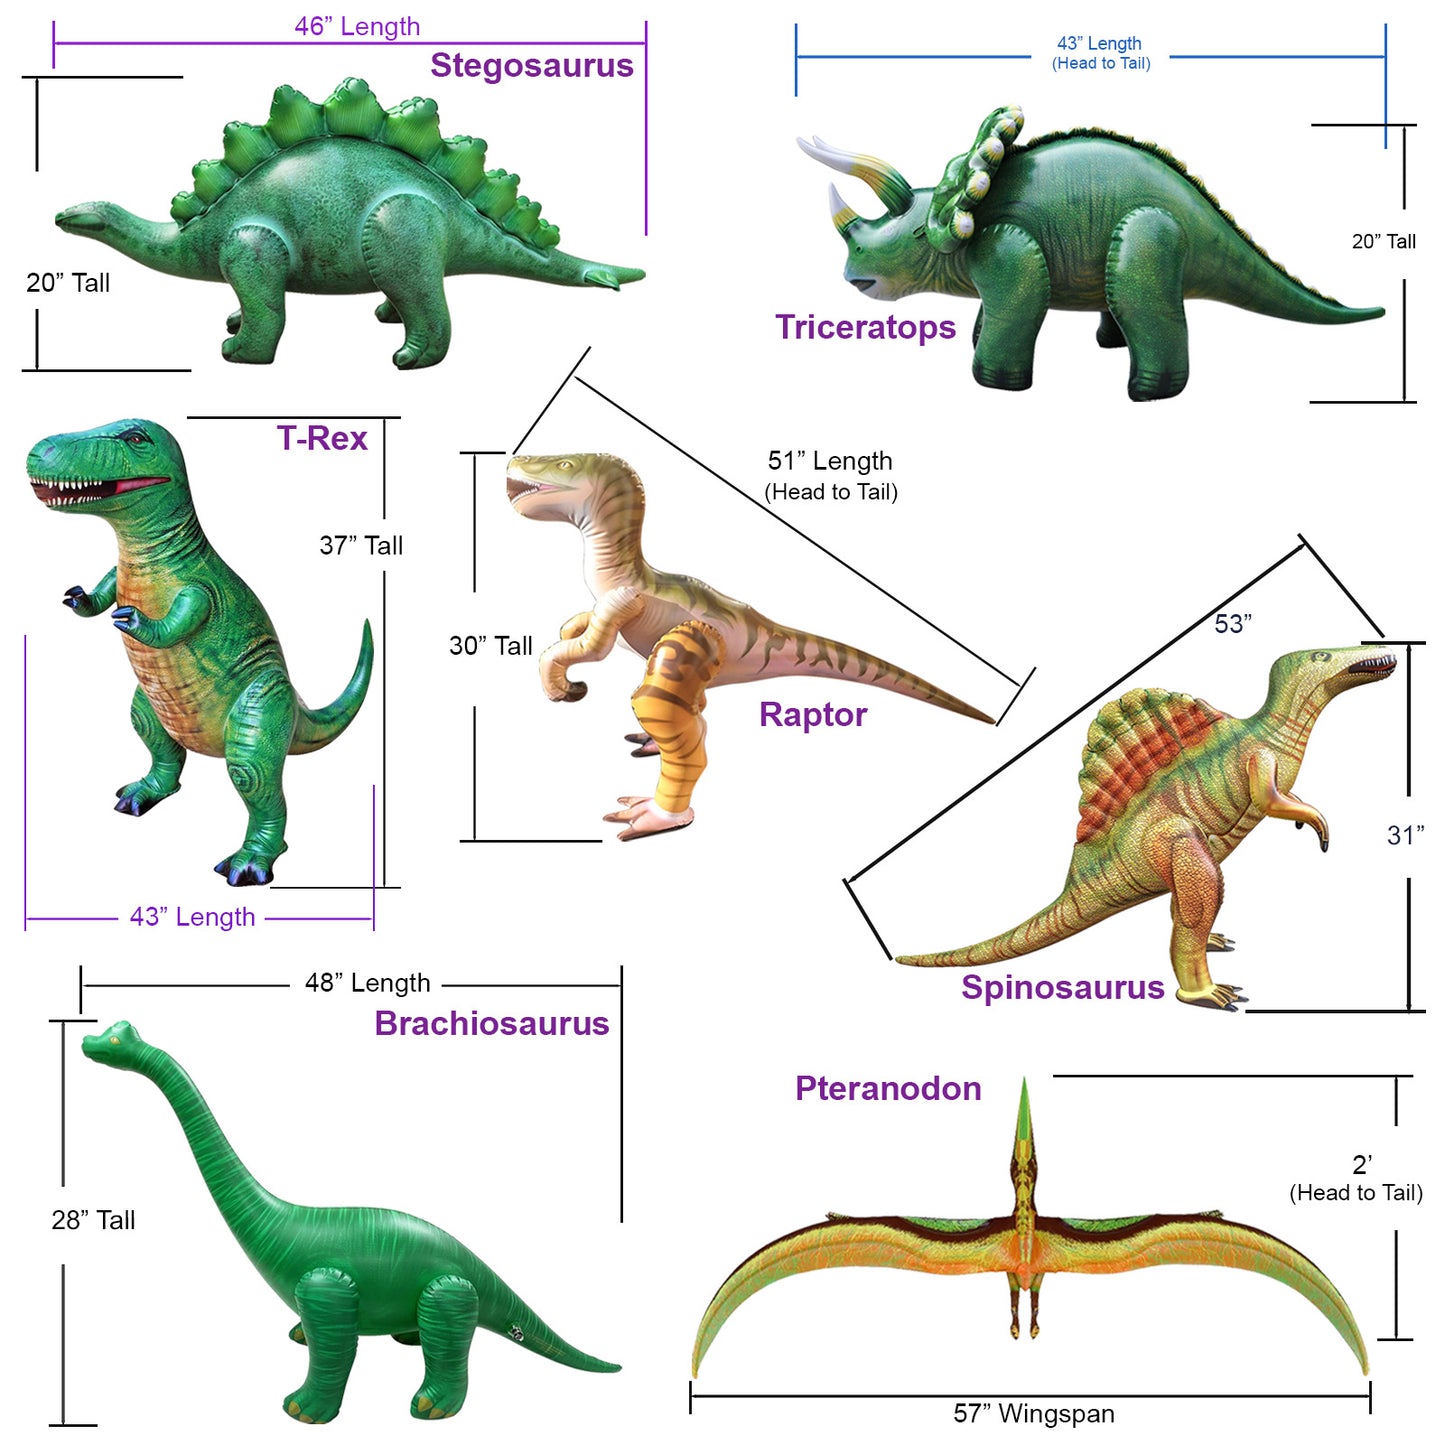 Dinosaur Collection Trex Brachiosaurus Triceratops Raptor and other Dinosaurs 7 piece, [JC-DINO7]